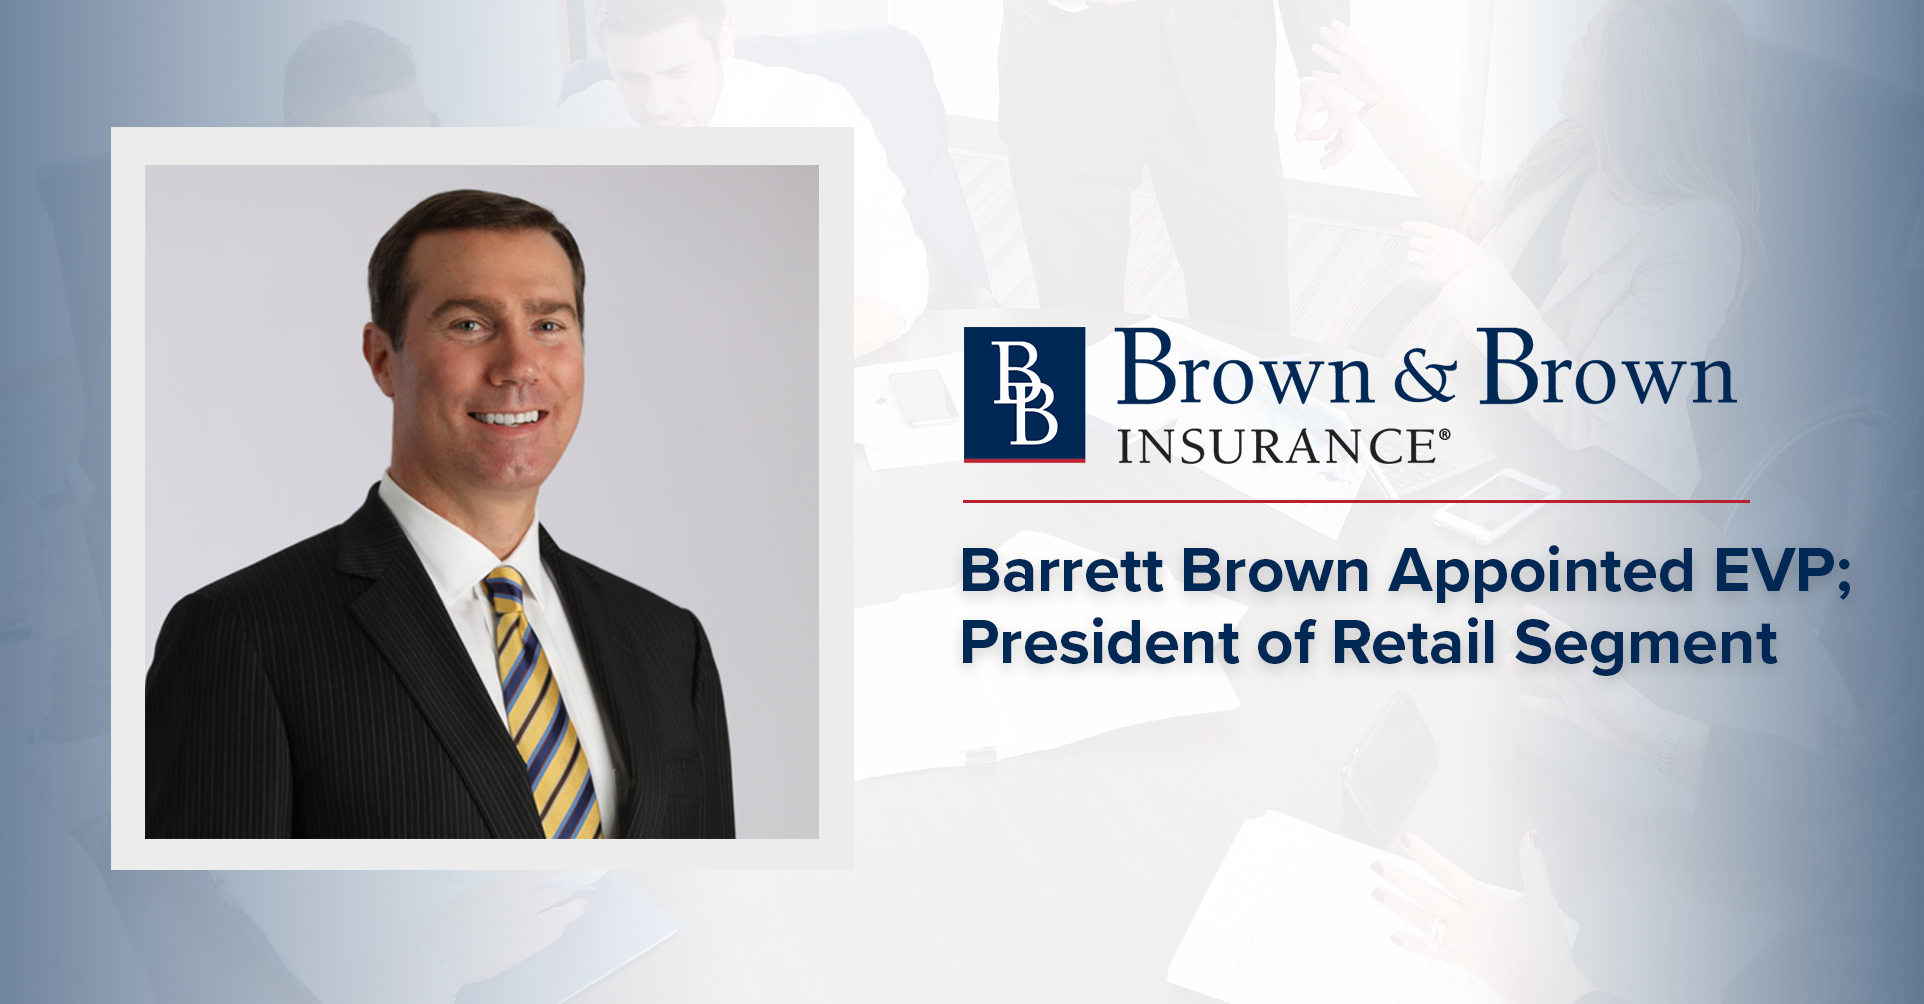 Barrett Brown Appointed EVP; President of Retail Segment